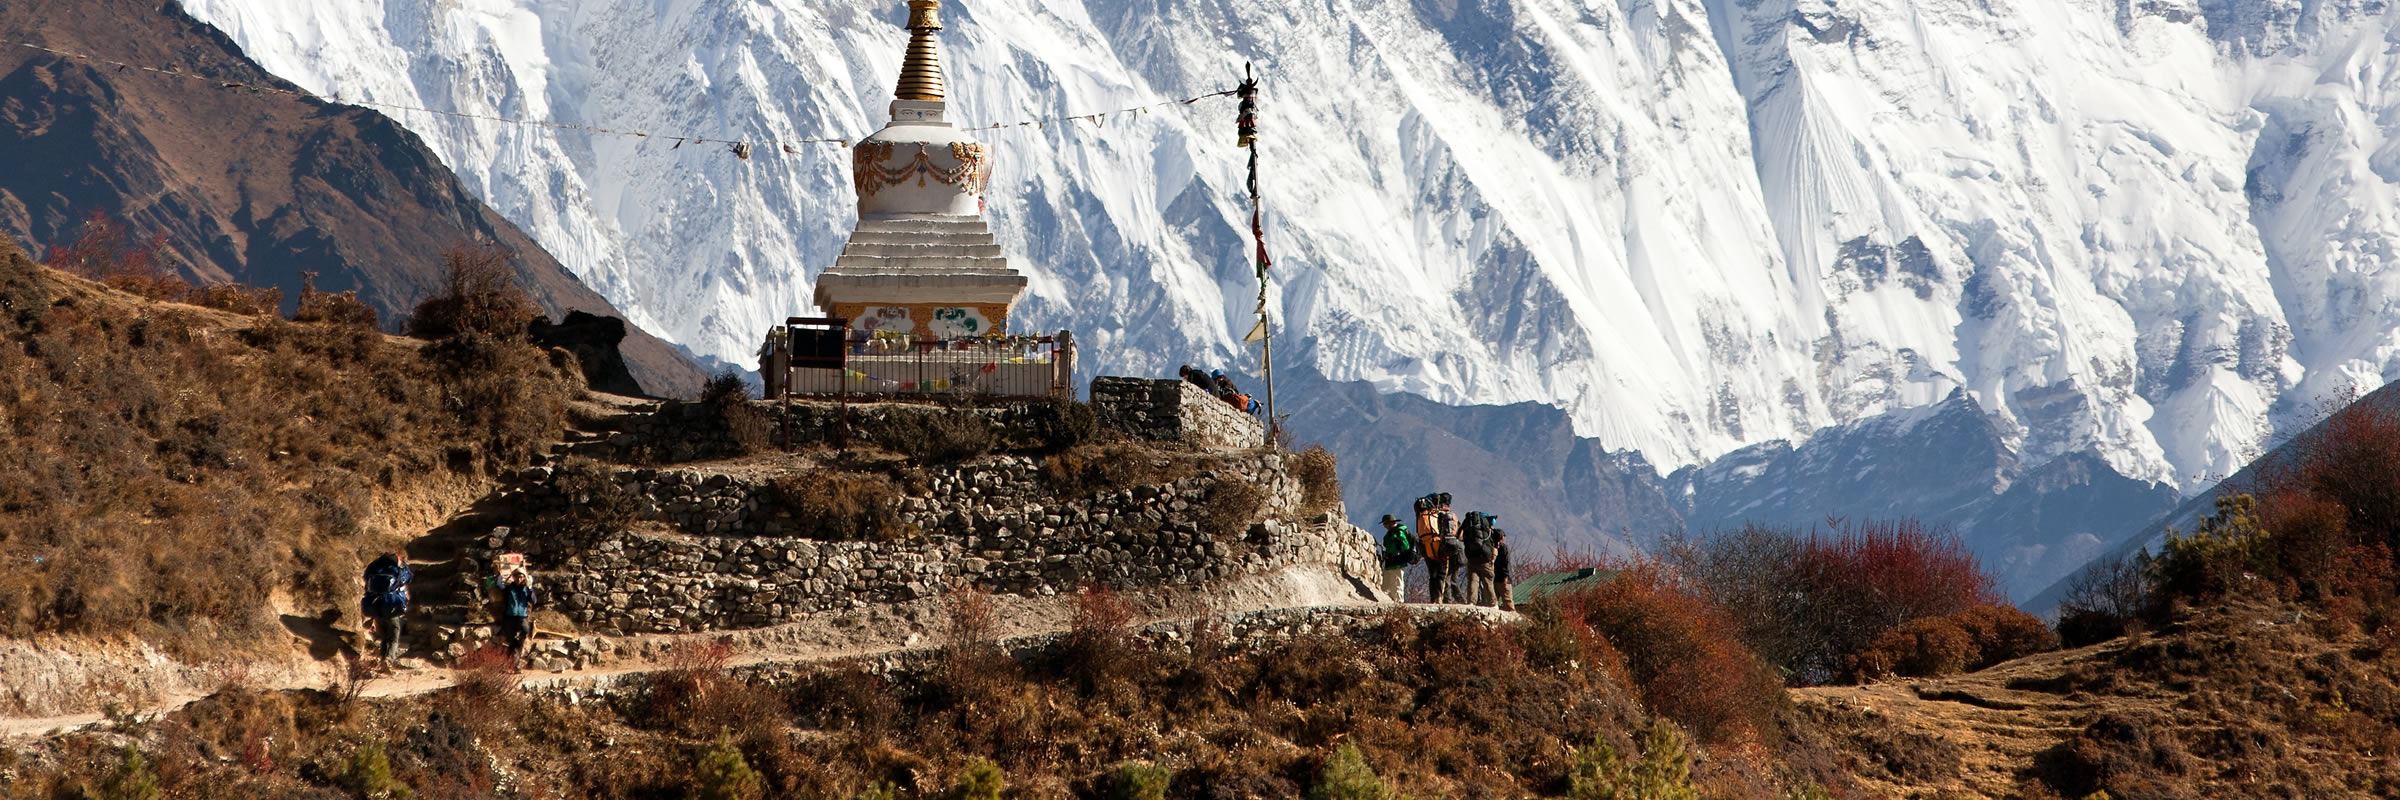 Nepal trekking guide | Audley Travel